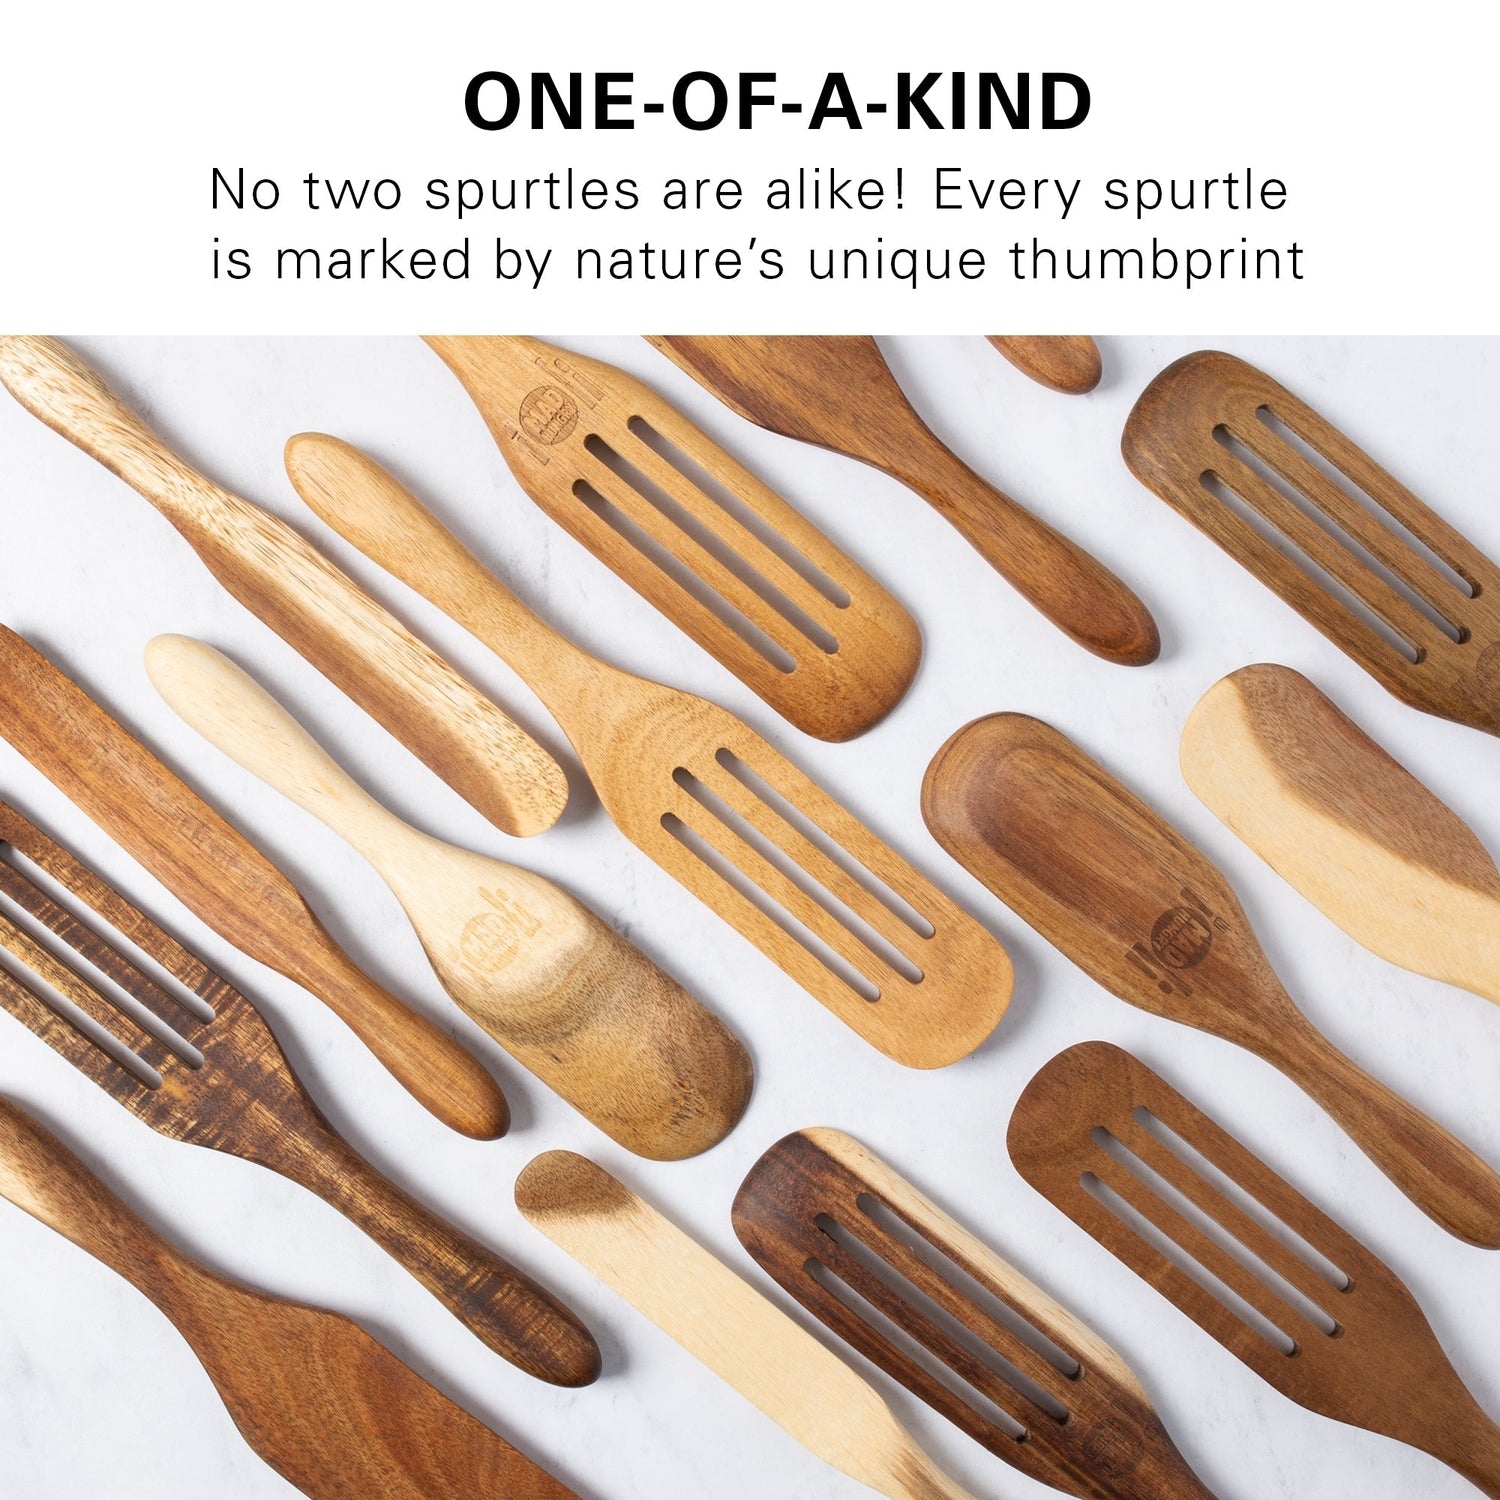 5 pcs Wooden Kitchen Utensils Set, Wooden Spoons Natural Spurtle